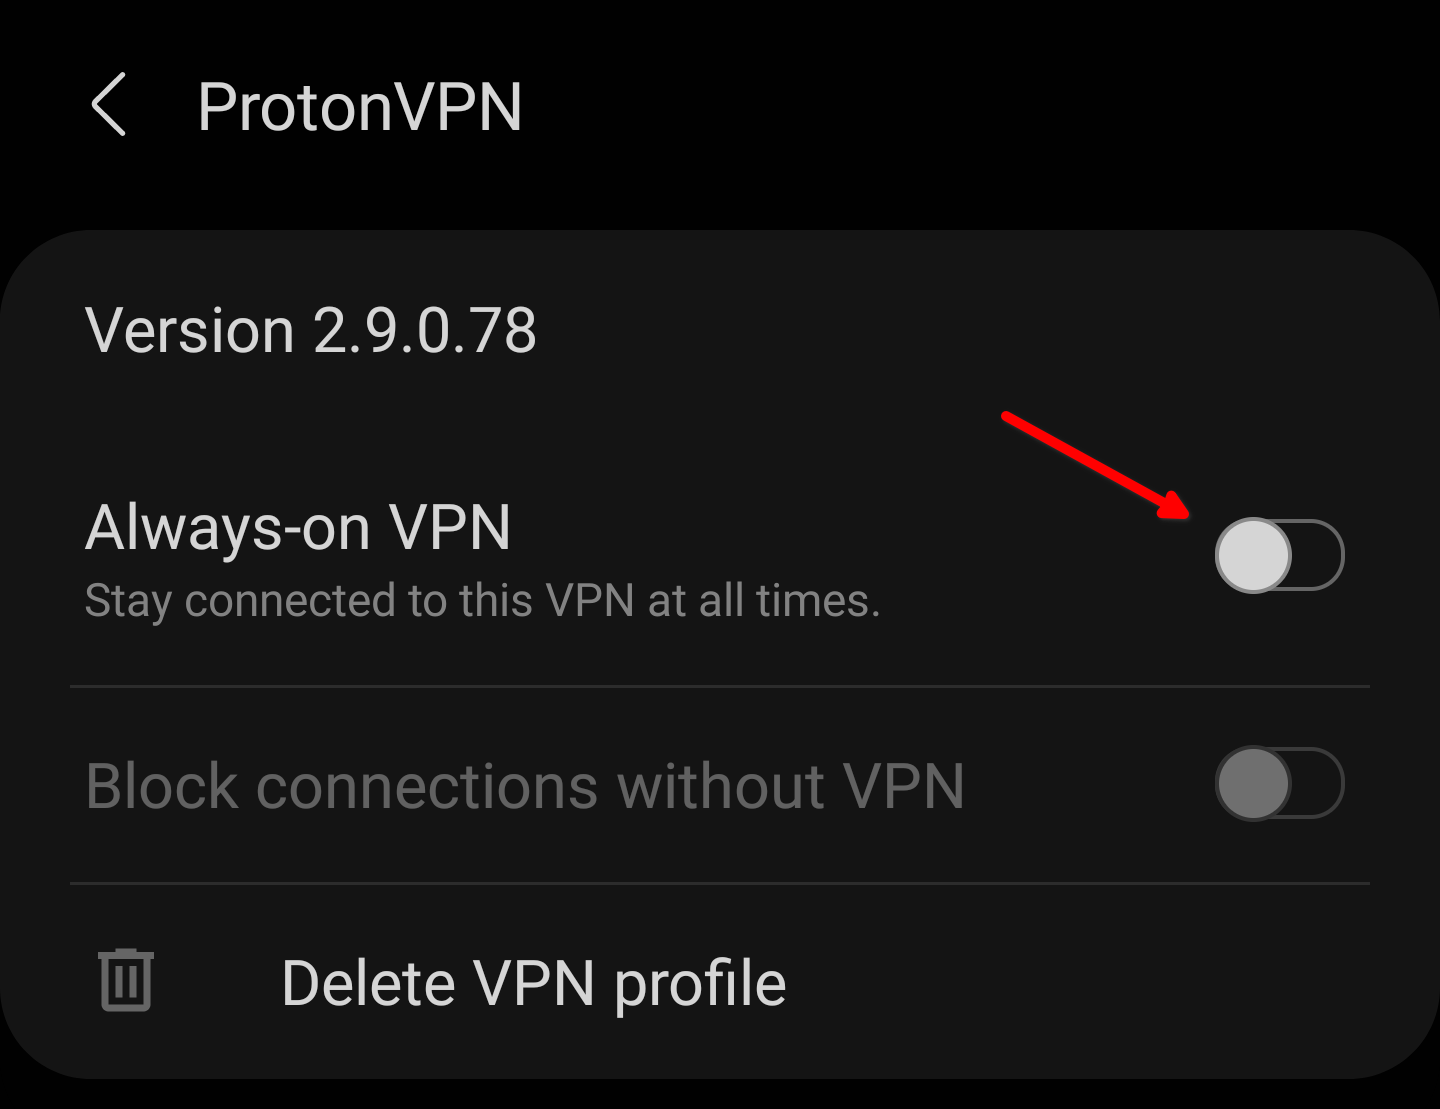 Disable always-on VPN